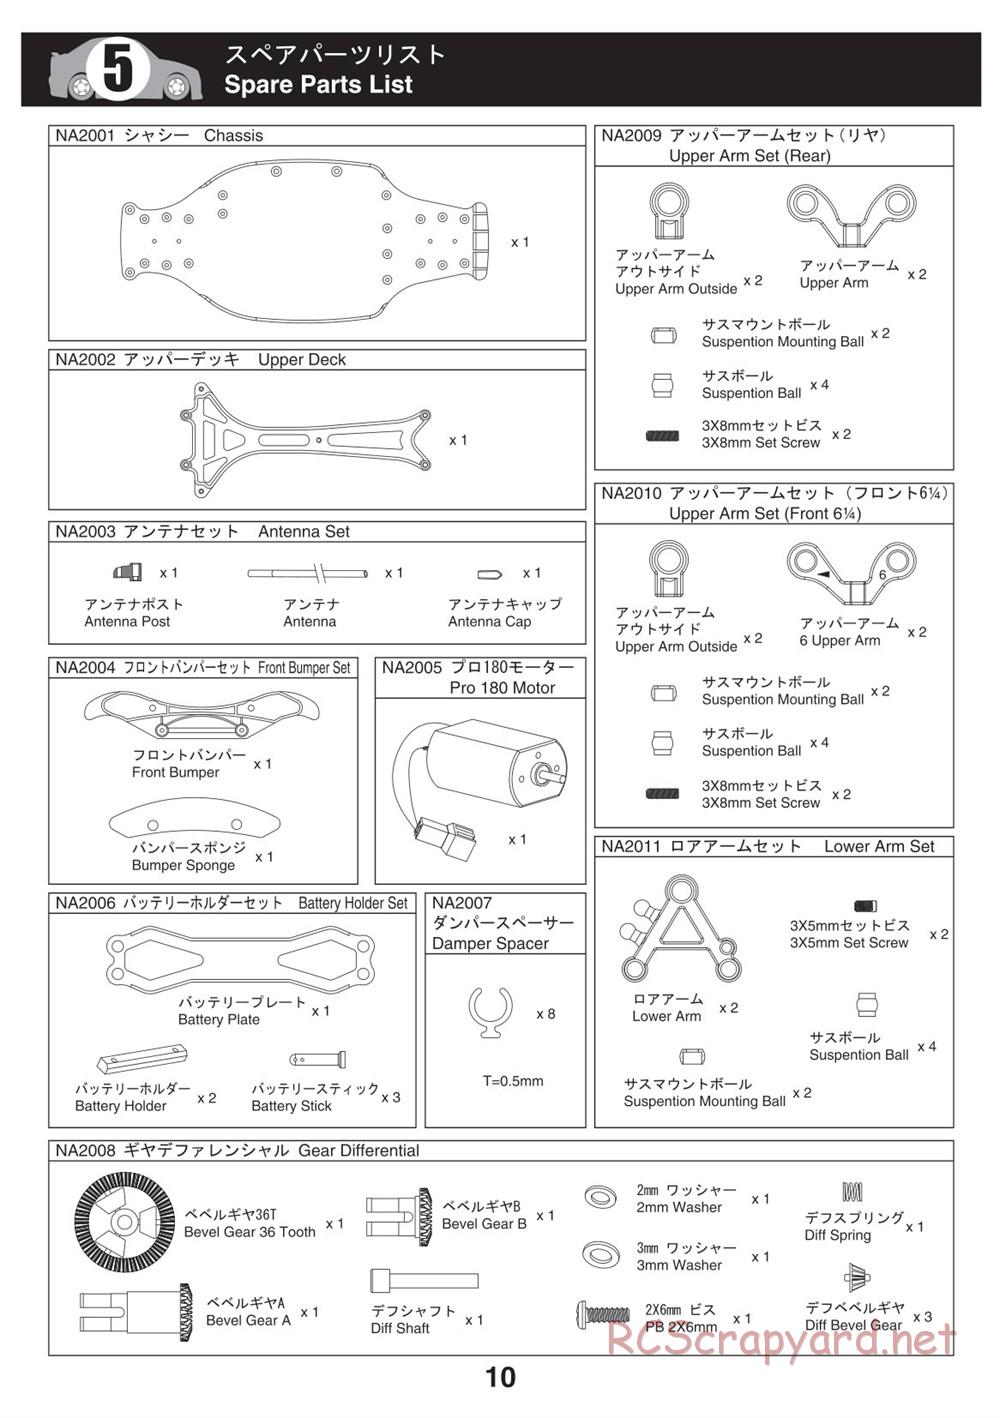 Kyosho - NRX-18 - Manual - Page 9